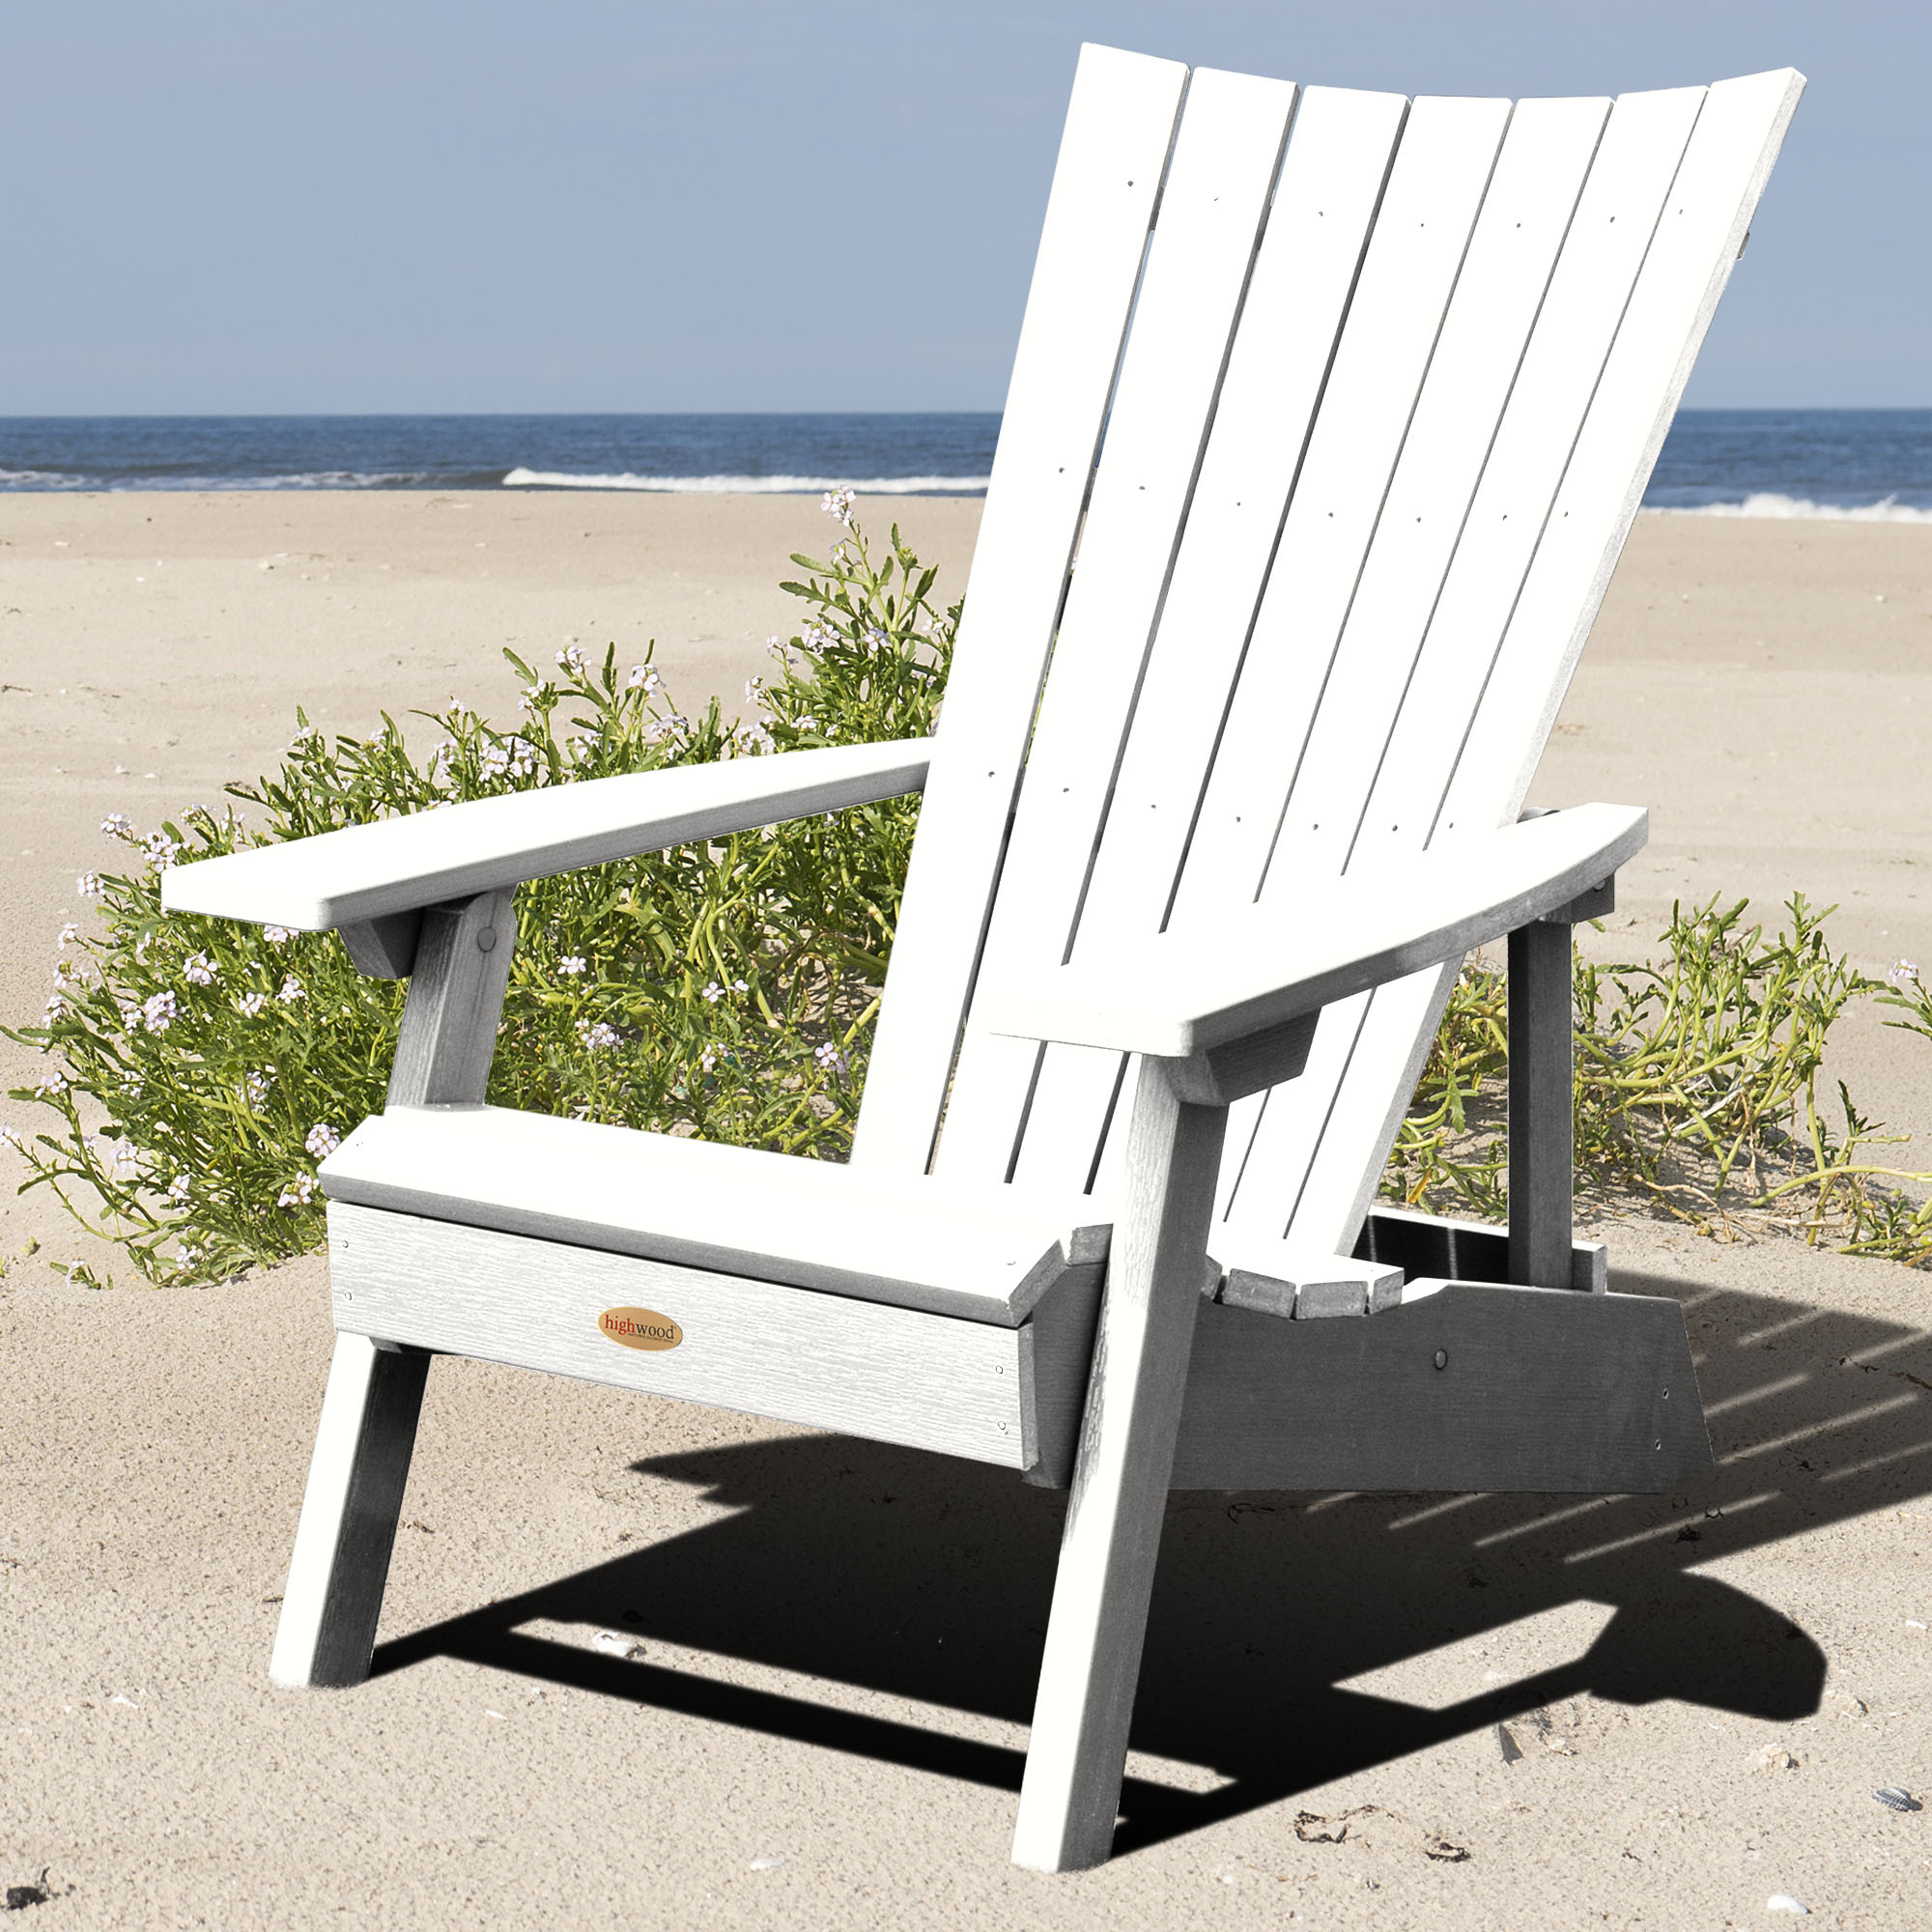 Highwood Manhattan Beach Adirondack Chair - image 3 of 3